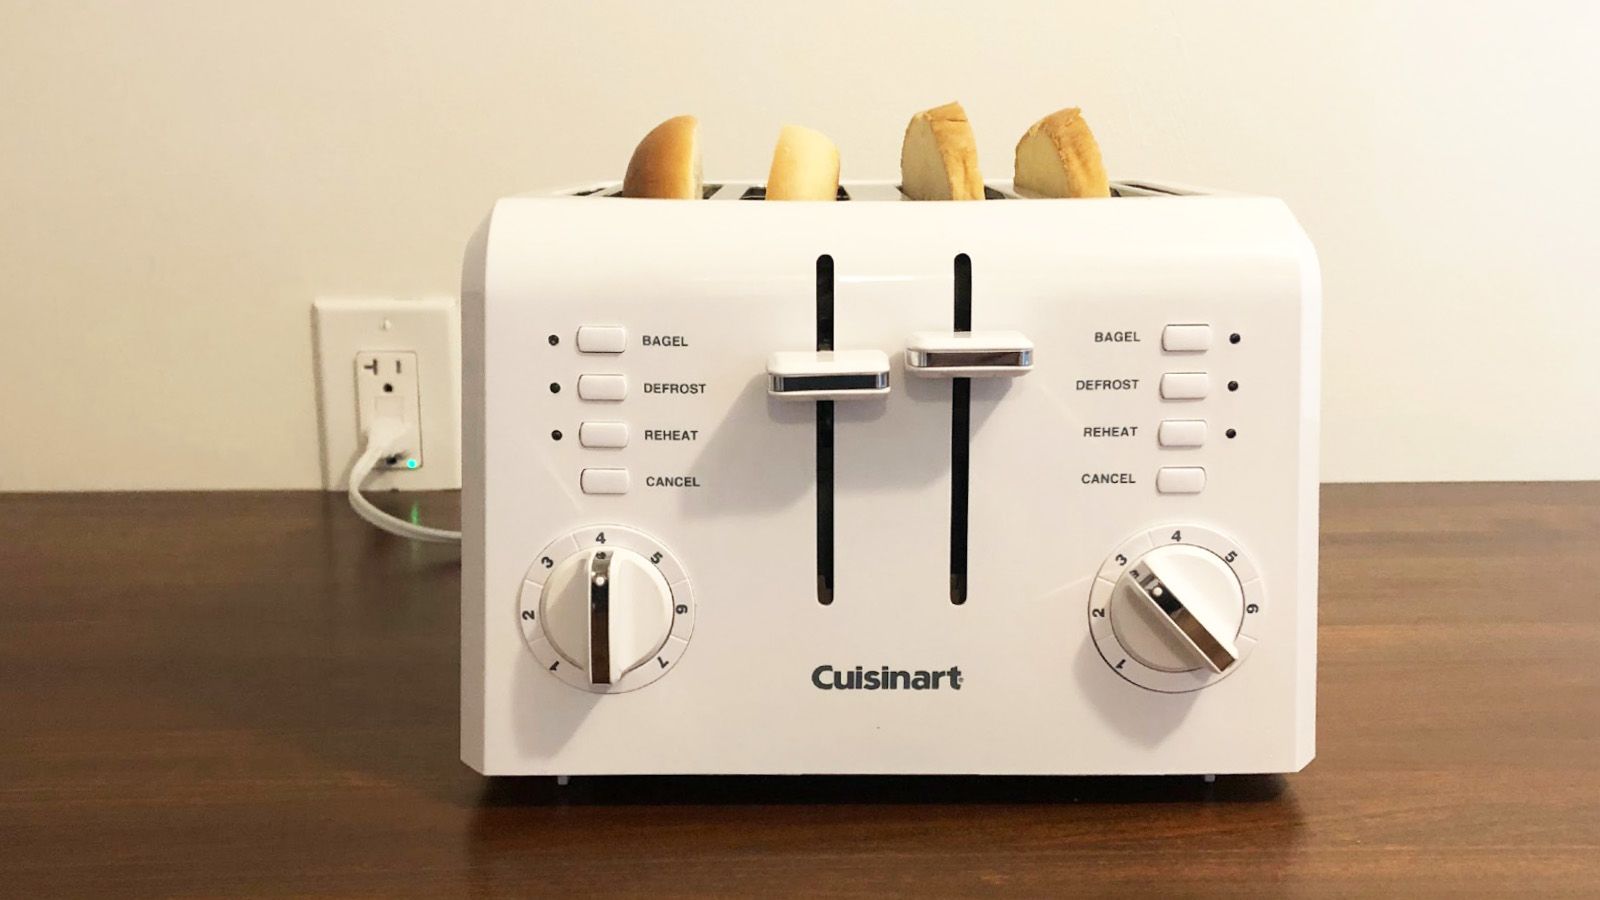 Top 10 Best 2-Slice Toasters in 2023